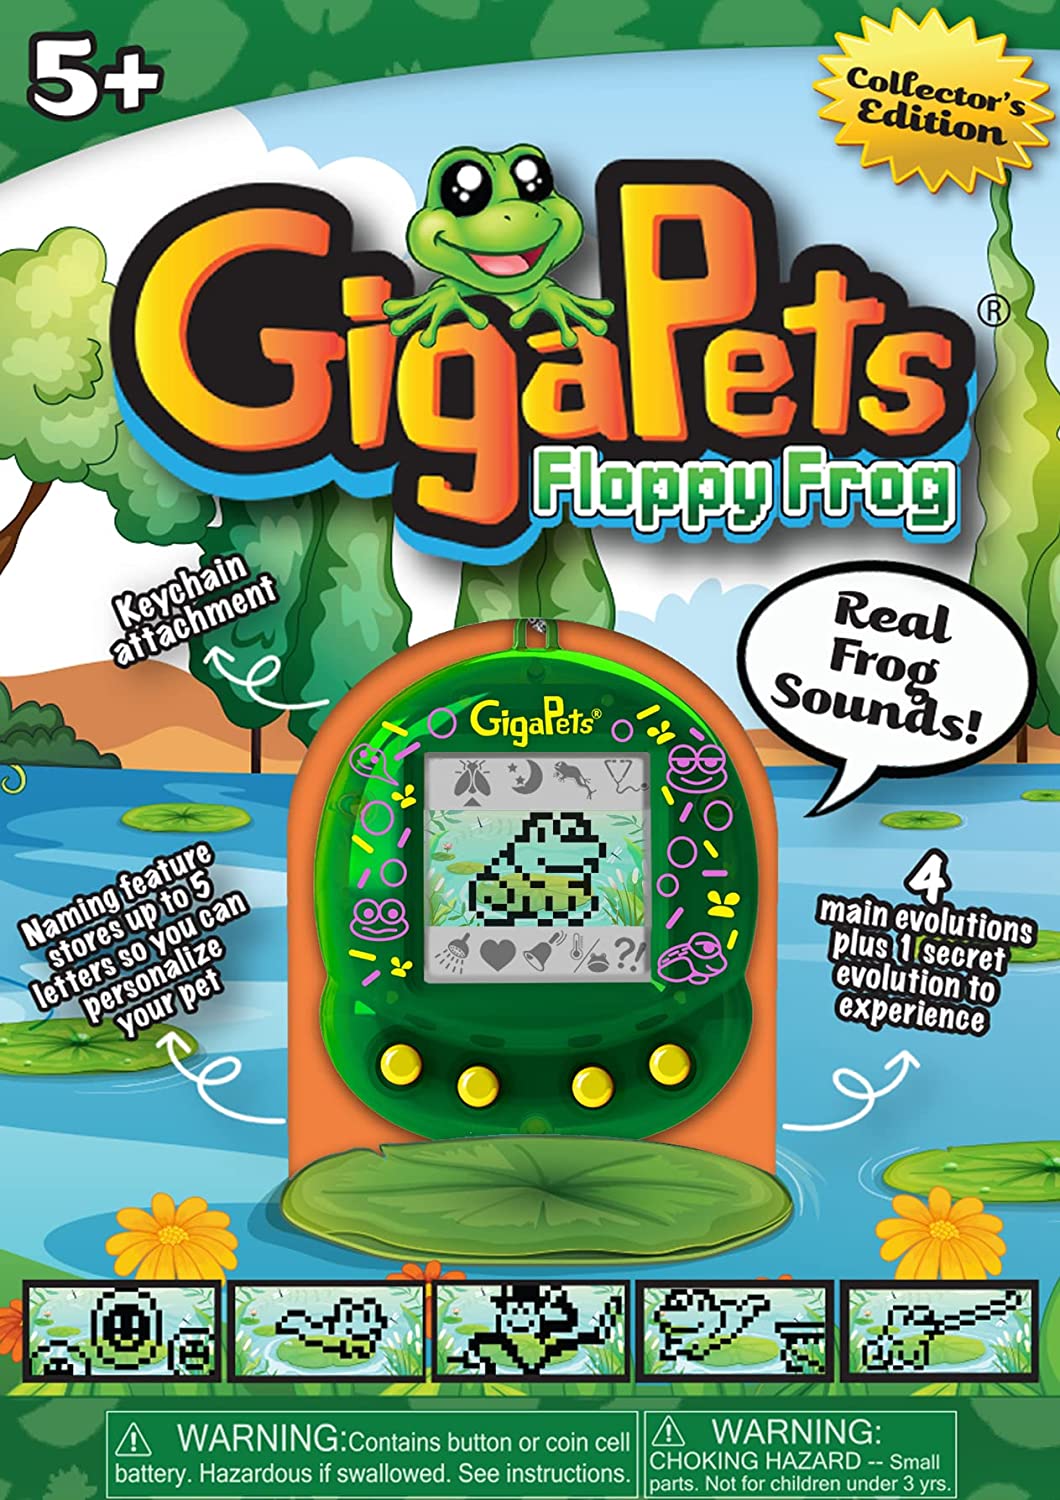 GigaPets Floppy Frog by Top Secret Toys #TST1144